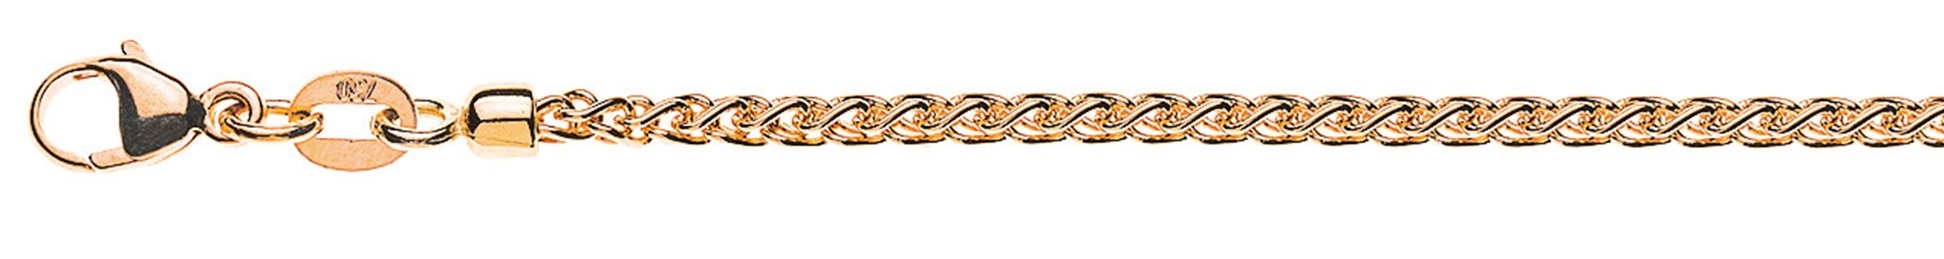 AURONOS Prestige Halskette Roségold 18K Zopfkette 60cm 2.15mm